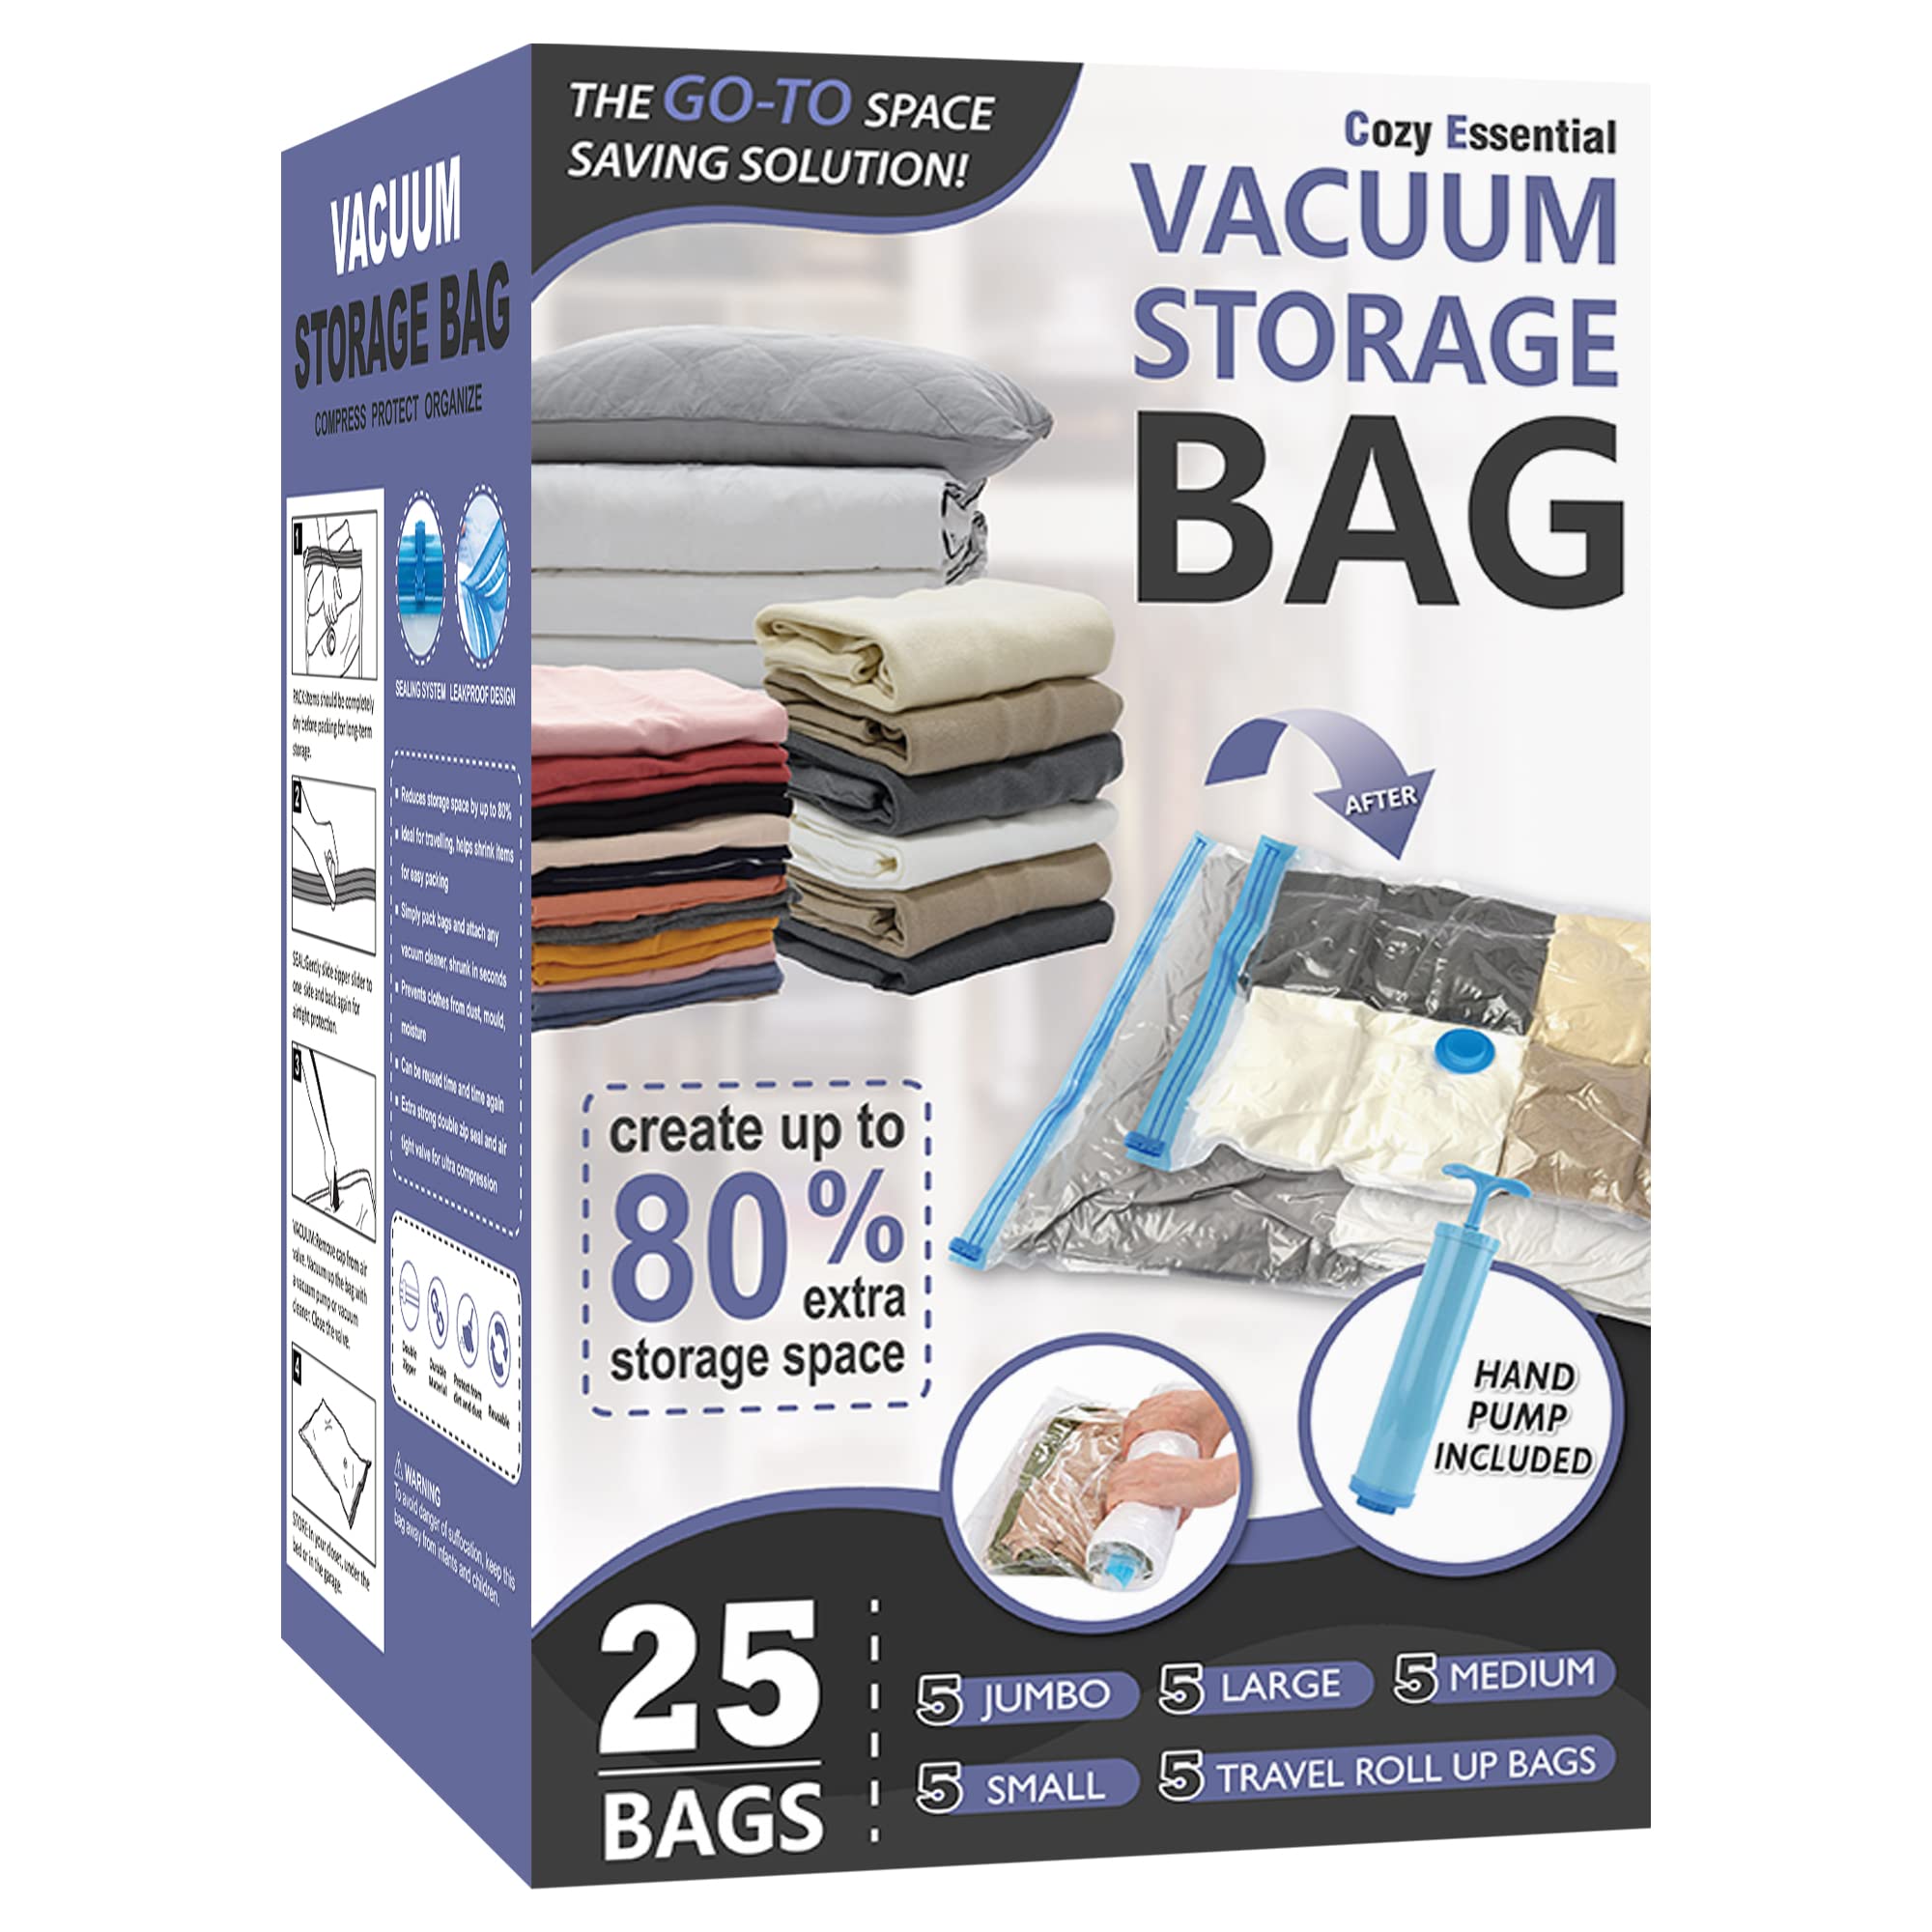 Cozy Essential Space Saver Bags